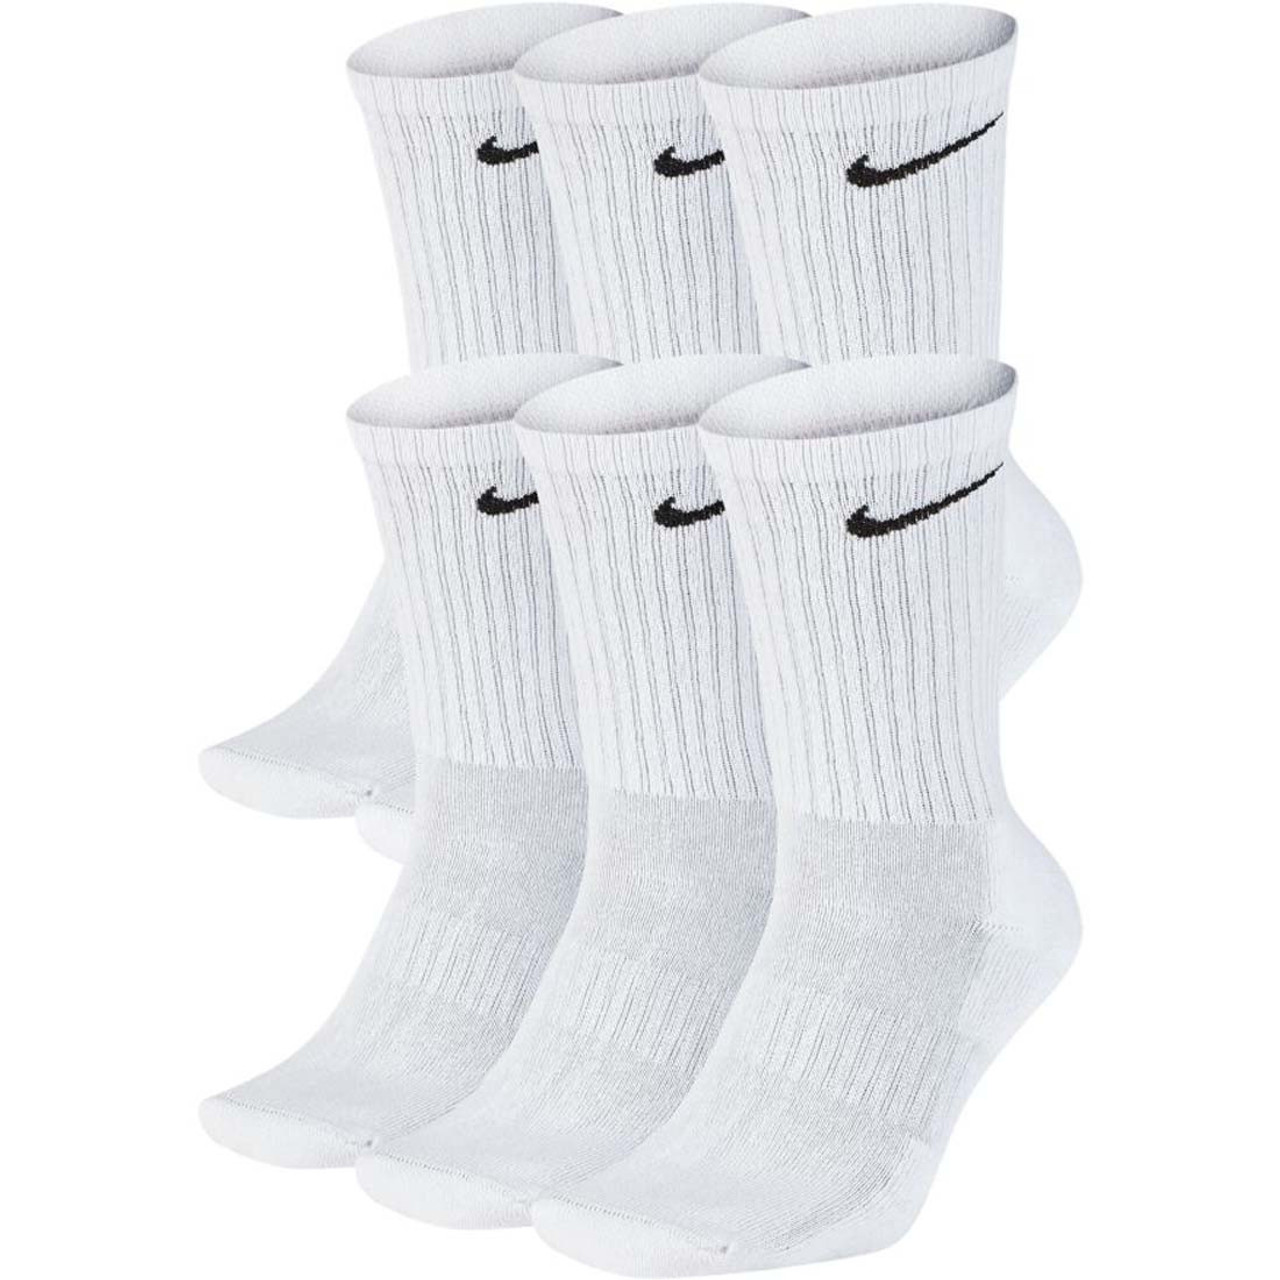 Nike White Nike Everyday Cushion Crew Socks- 6 Pack TYLER'S